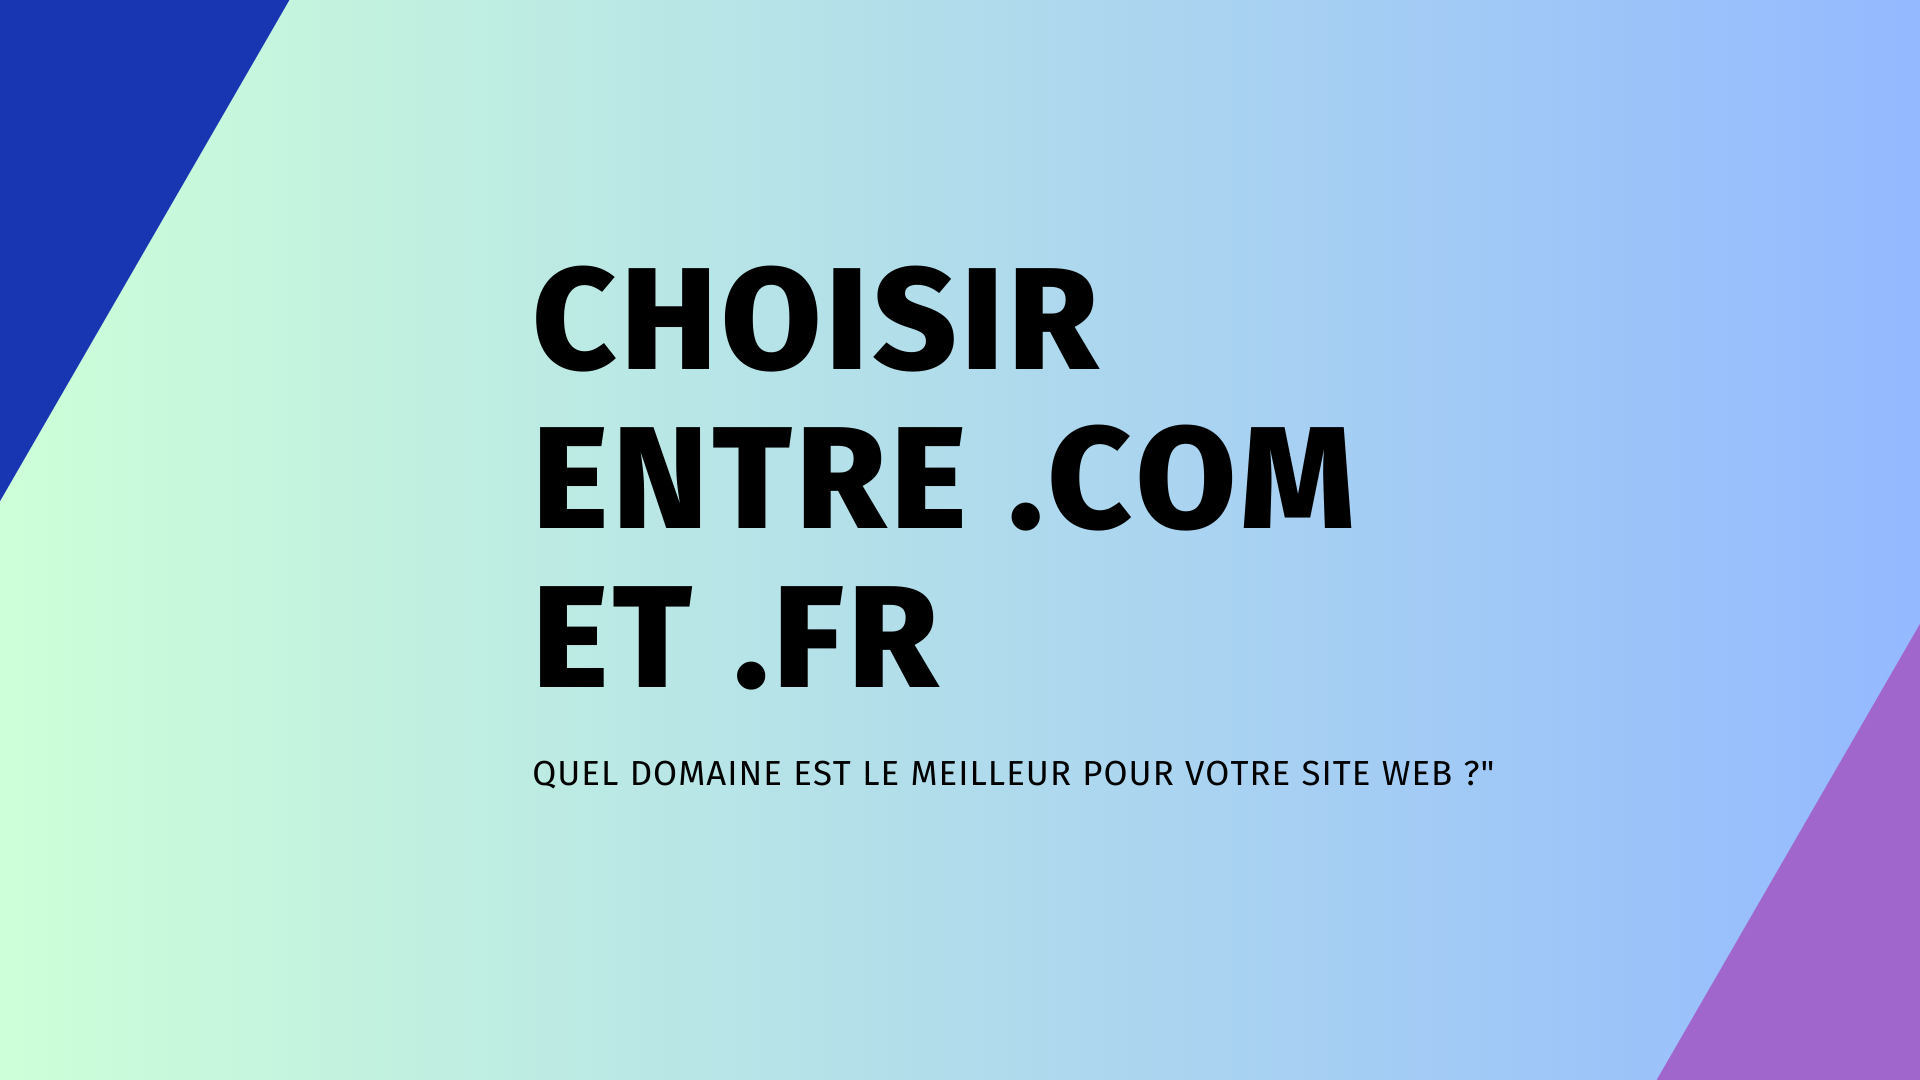 Choisir entre .com et .fr